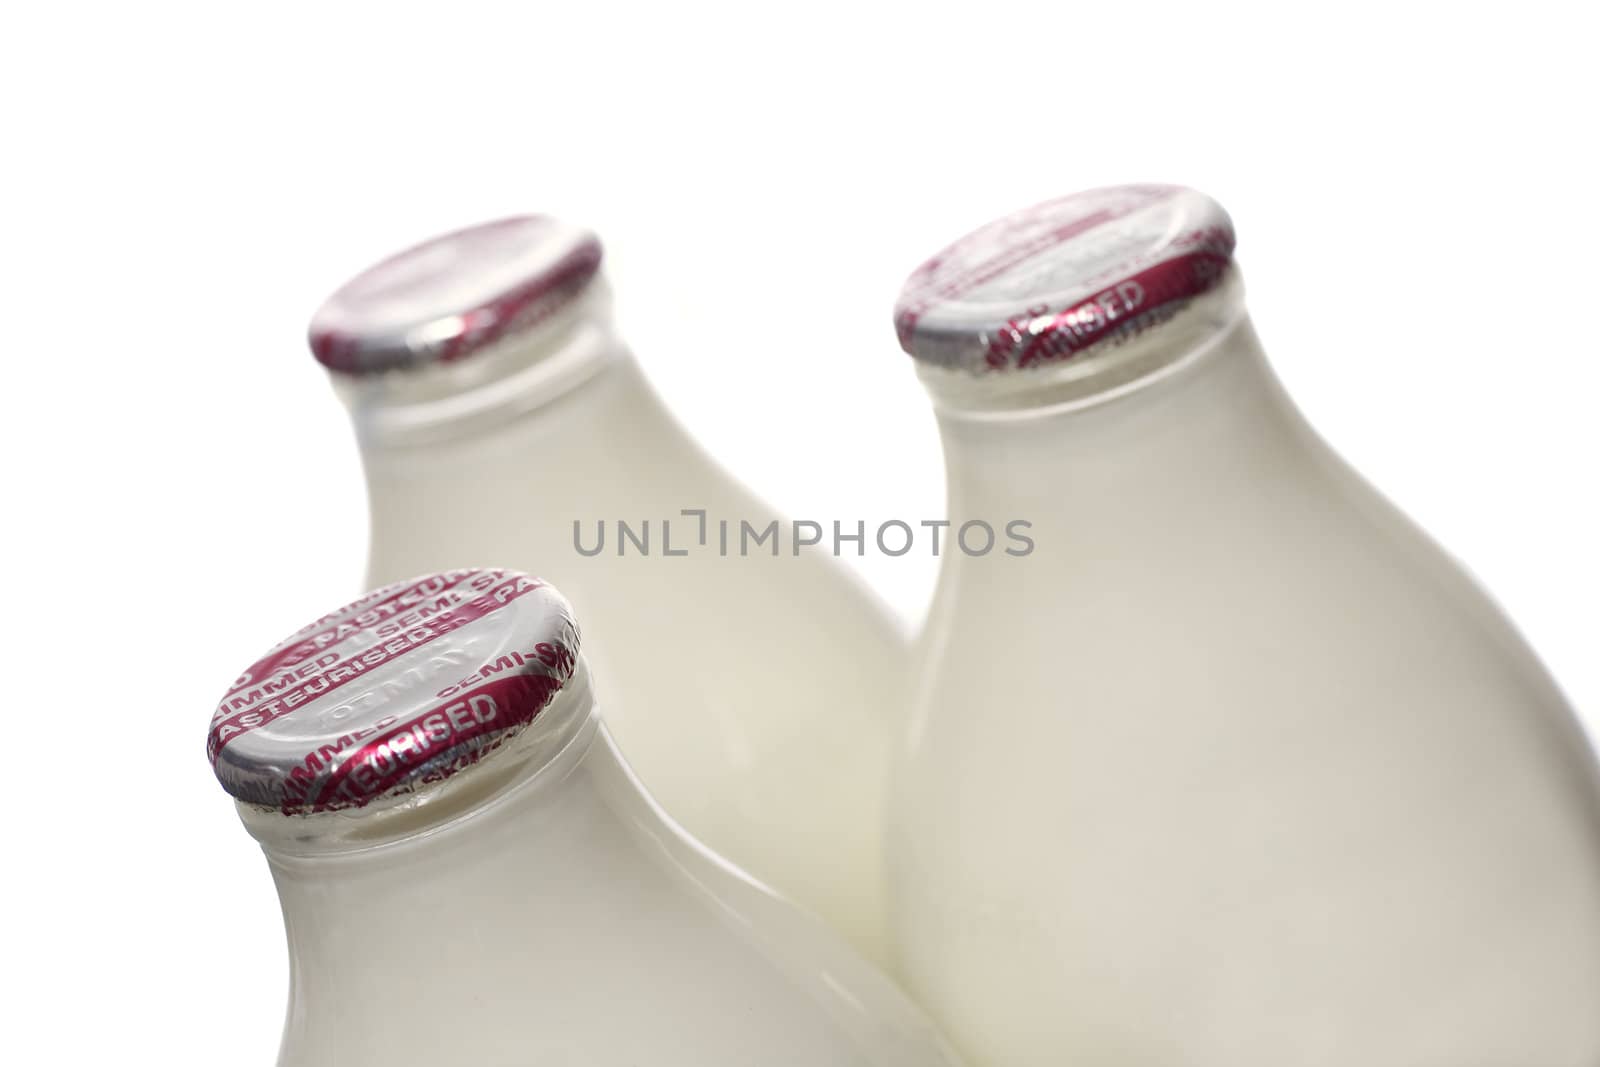 Semi-Skimmed Milk by grandaded